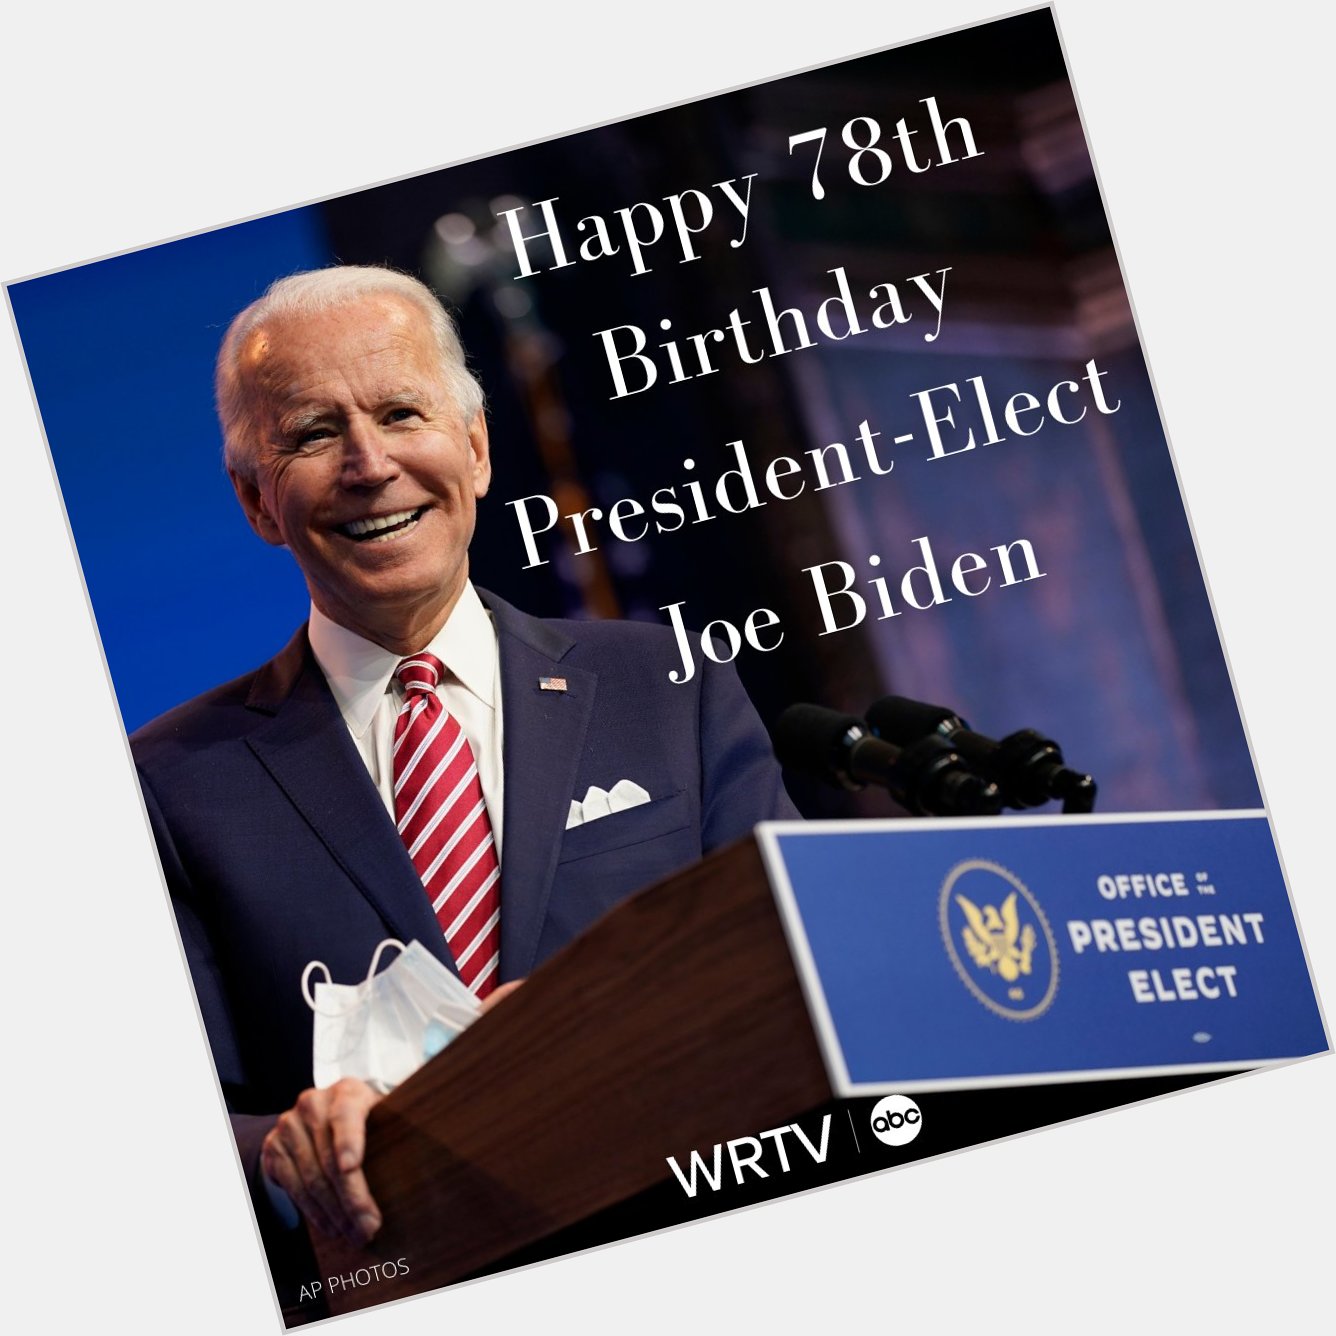 Happy Birthday, President-Elect Joe Biden! 